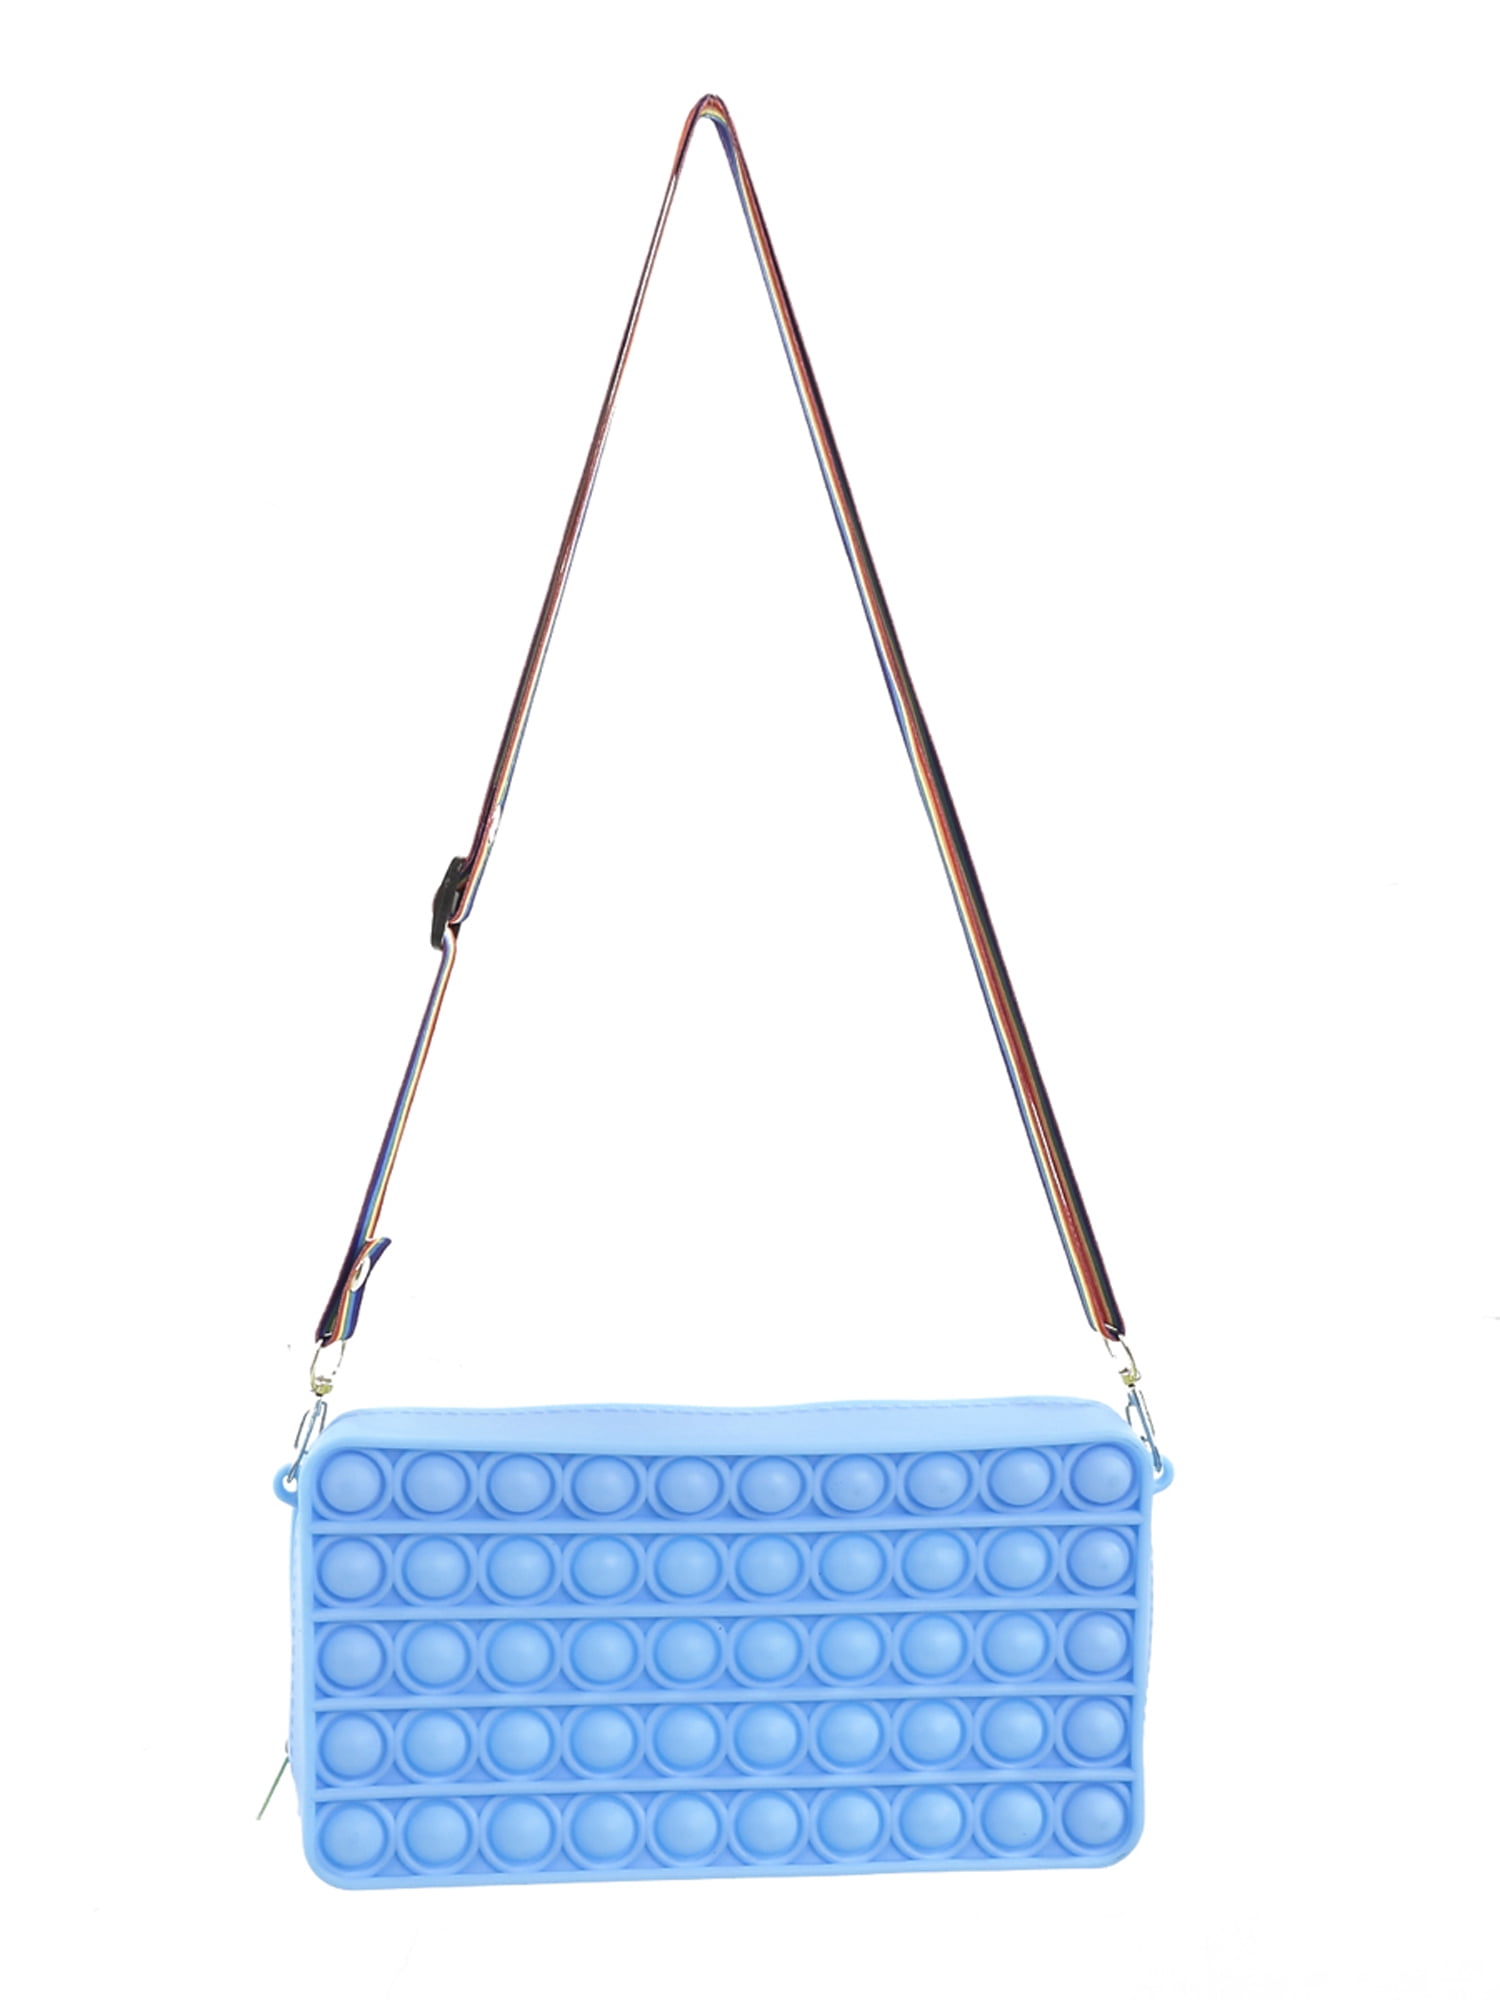 2 in 1 Bubble Purse Handbags Rainbow Silicone Sensory Toys Crossbody Bag with Adjustable Shoulder Strap & Zip Closure Pop Shoulder Bag Strawberry Wallet for Grils Women 